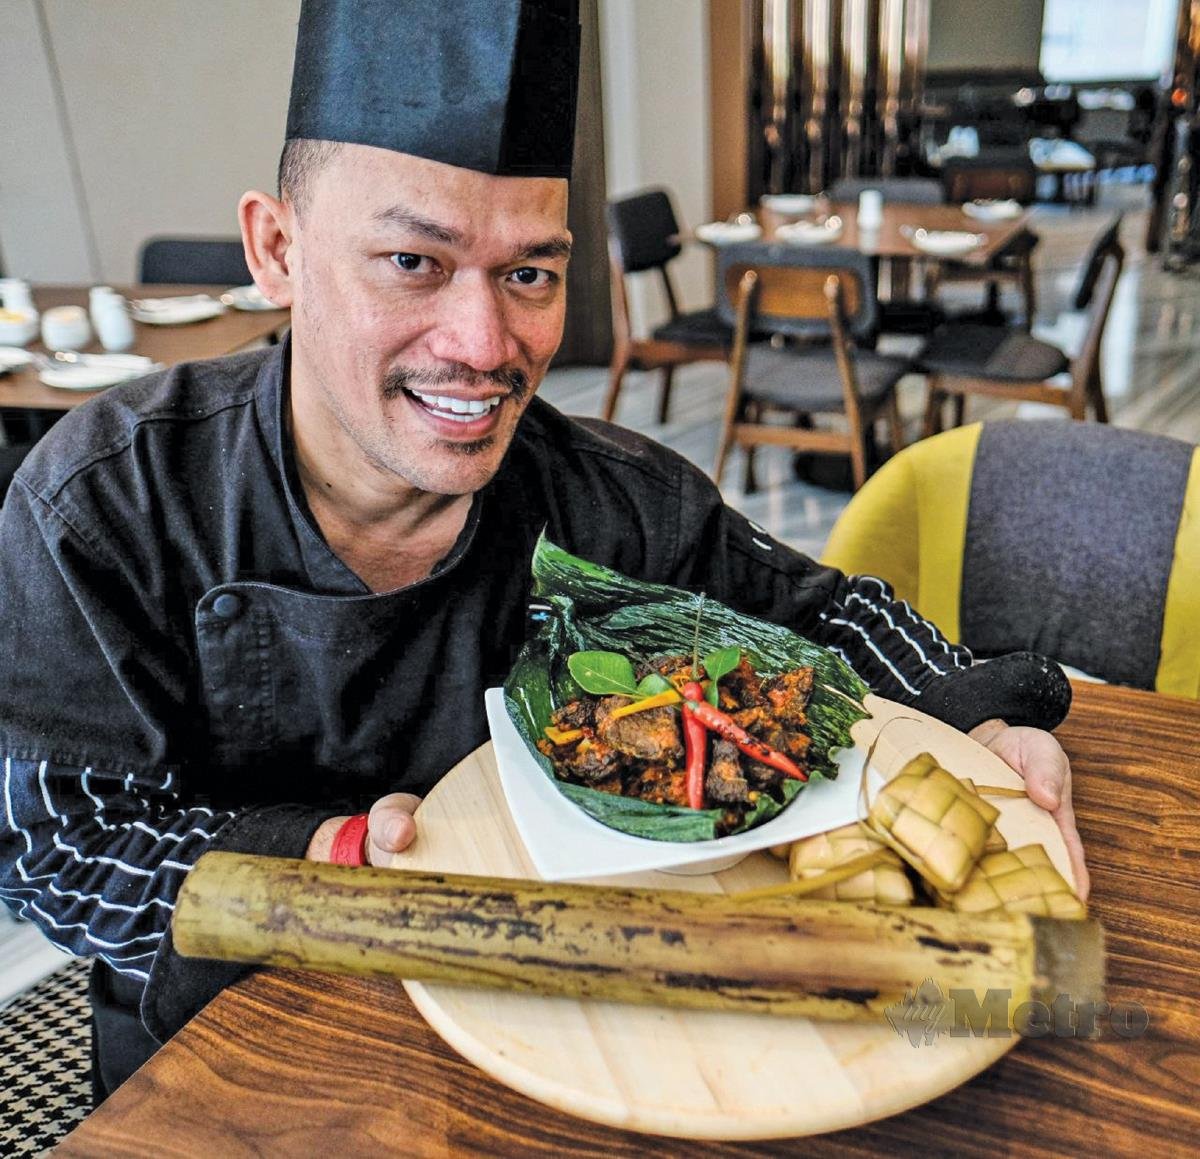 SELAIN dinikmati bersama nasi, rendang paru Parit Jawa juga enak dimakan bersama ketupat dan lemang. - FOTO Hazreen Mohammad  